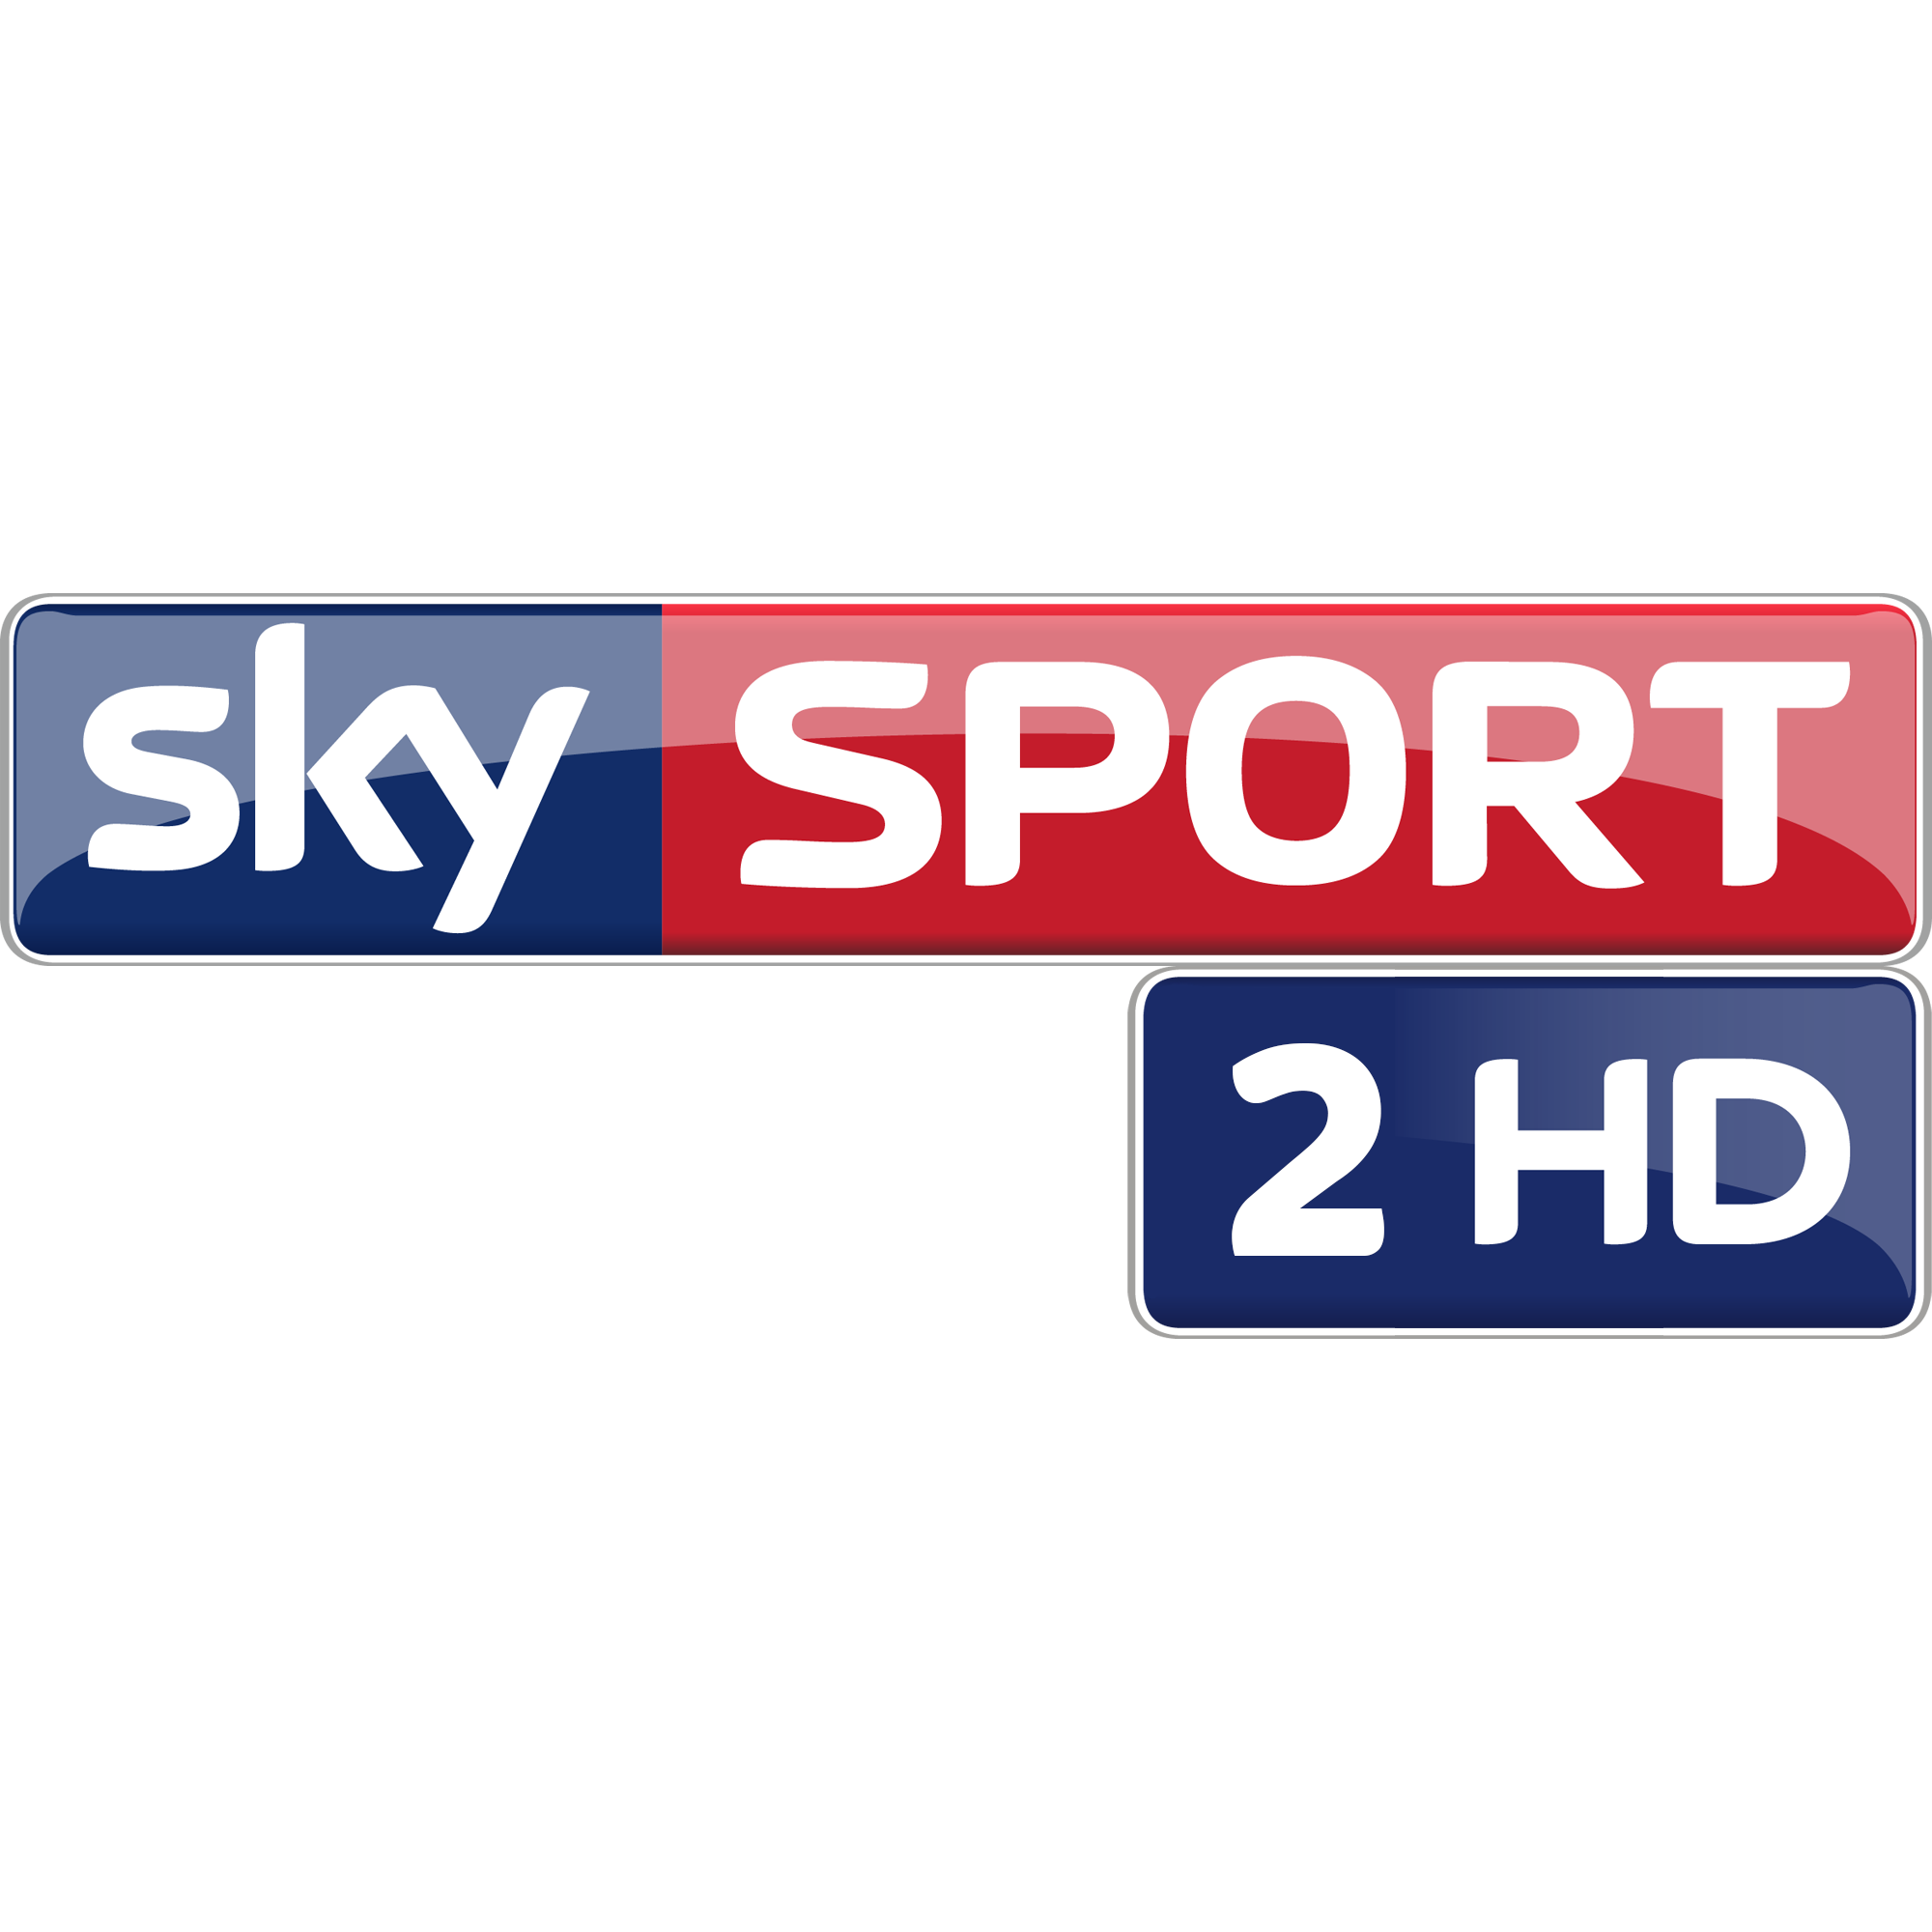 Sky Sport. Sky Sport 1. Sky Sports logo. IPTV пакет. Sky sports live stream